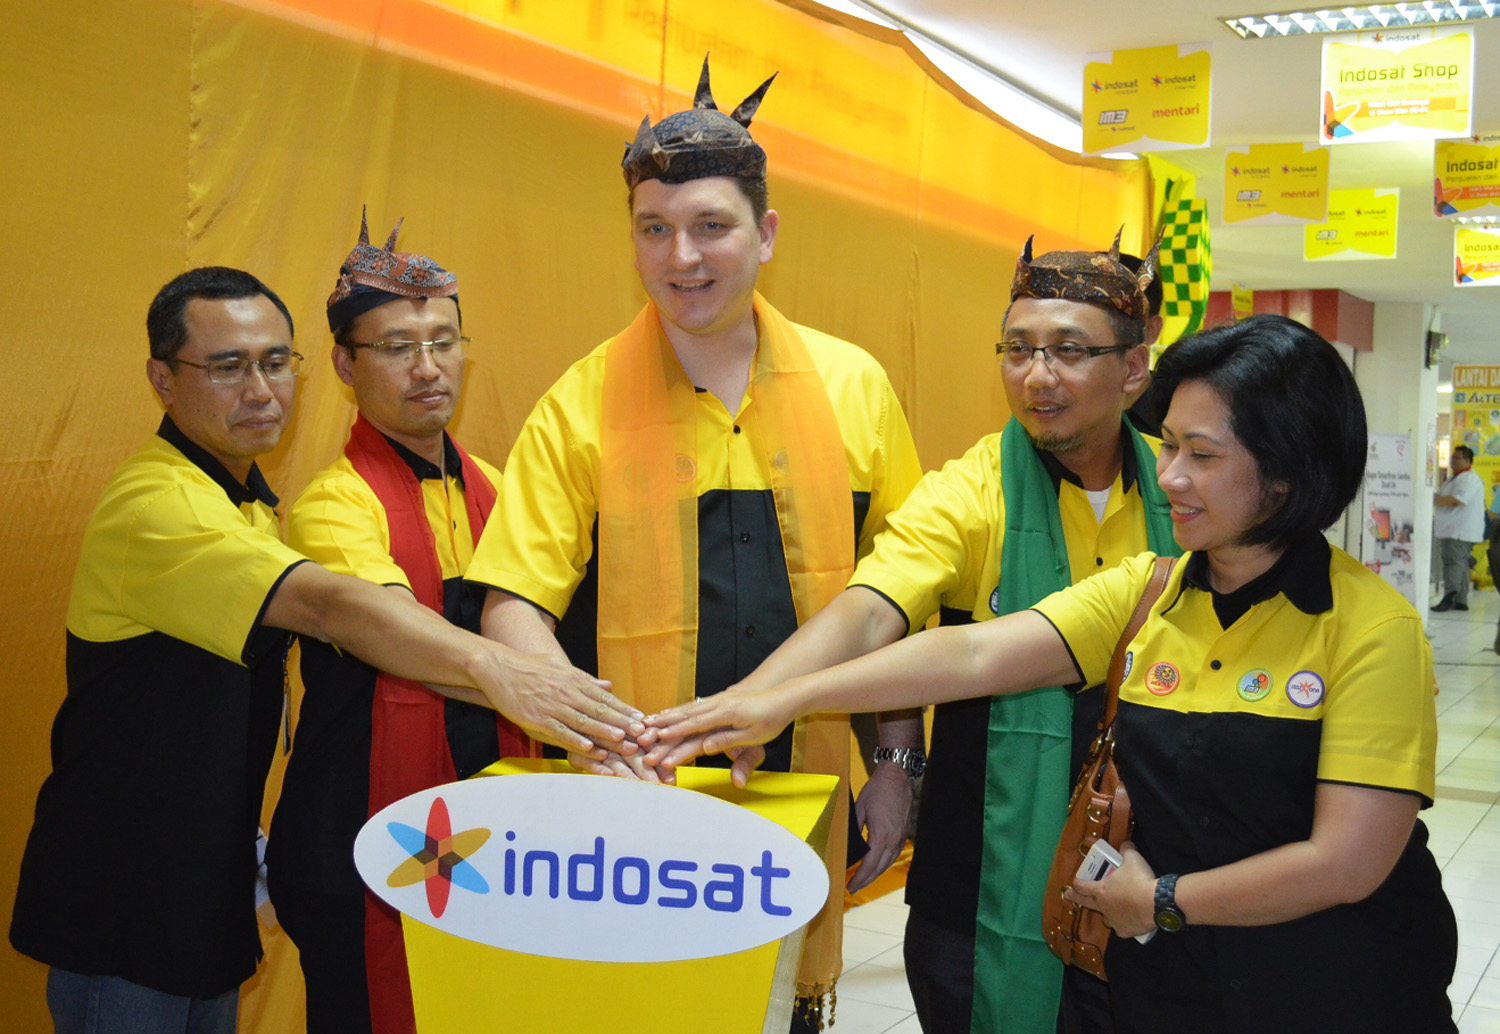 Photo of Indosat Shop ujud kedekatan pada pelanggan